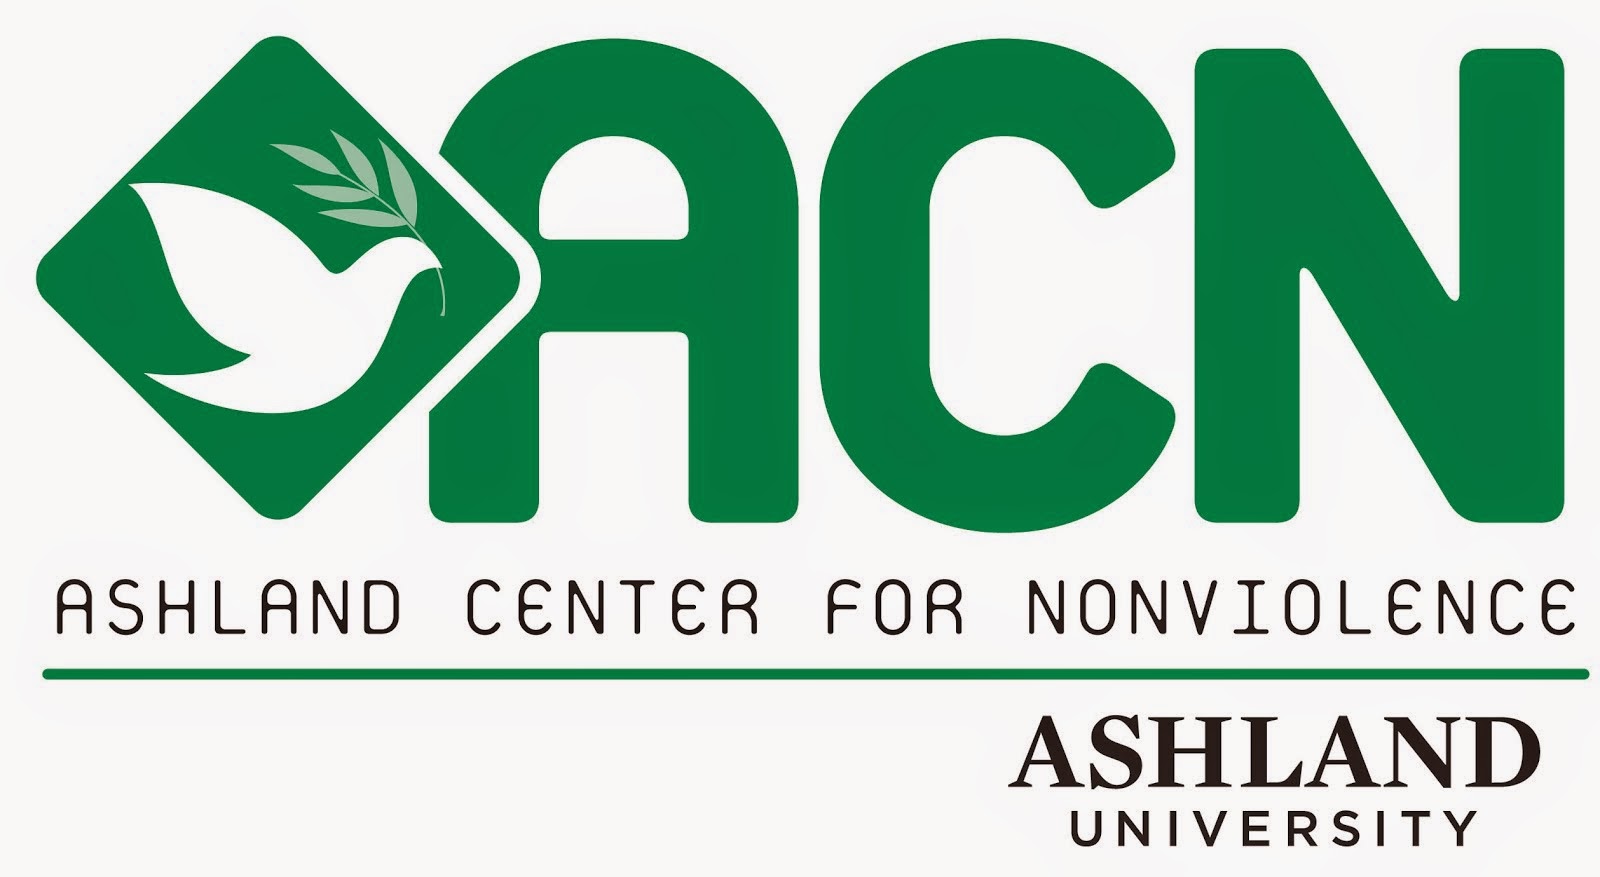 Ashland Center for Nonviolence